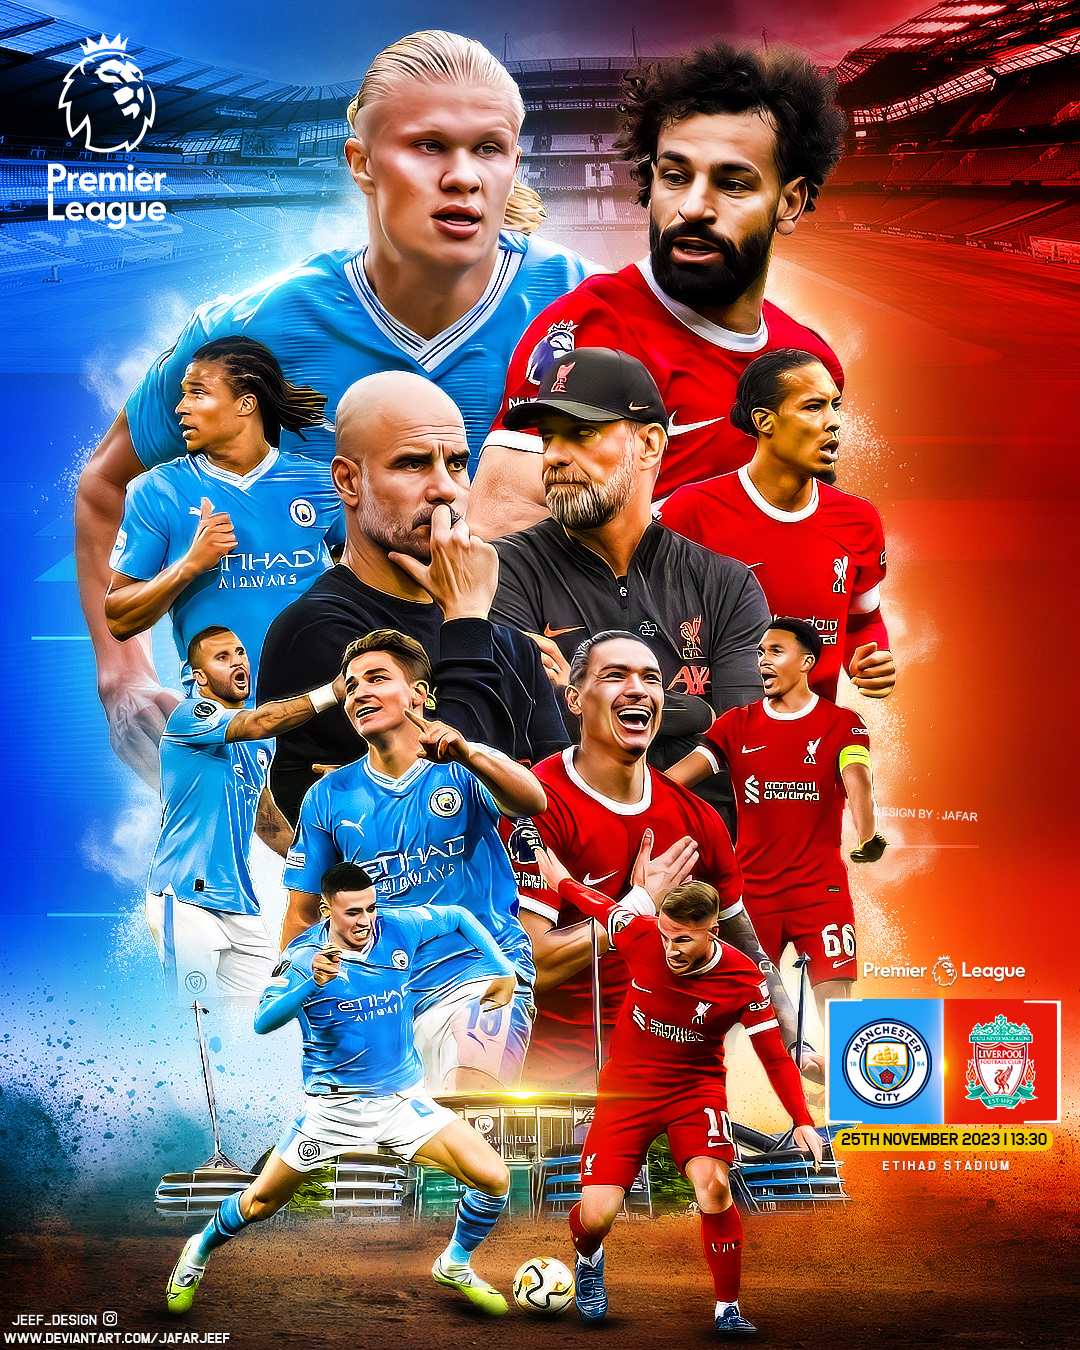 Premier League Manchester City Man City city Liverpool football soccer poster champions league salah graphics Erling Haland